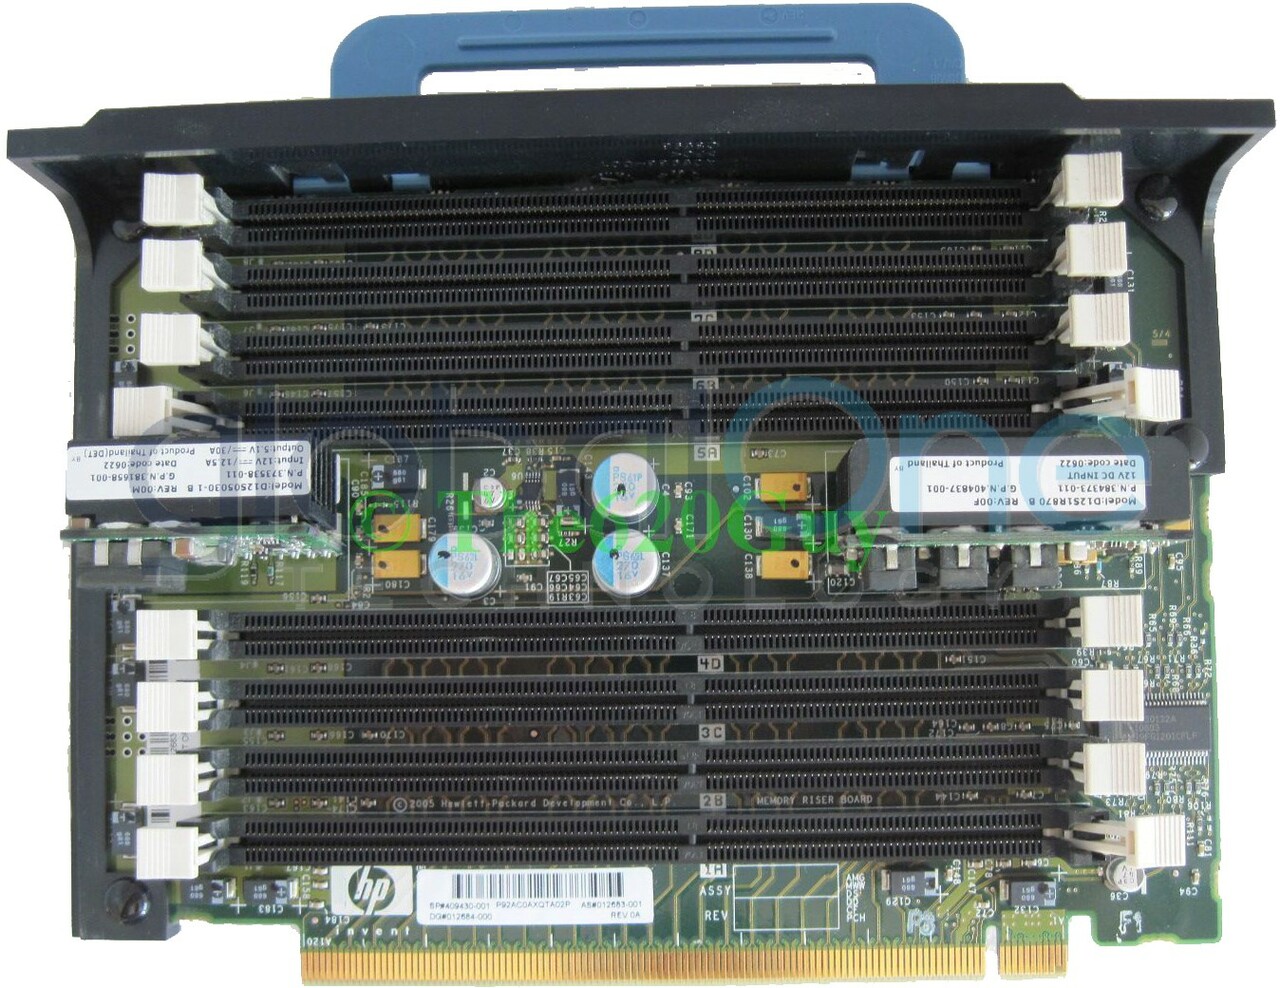 410127-001 ML570 G4 Hot-plug Memory Expansion Board (HPE Option #: 403702-B21)